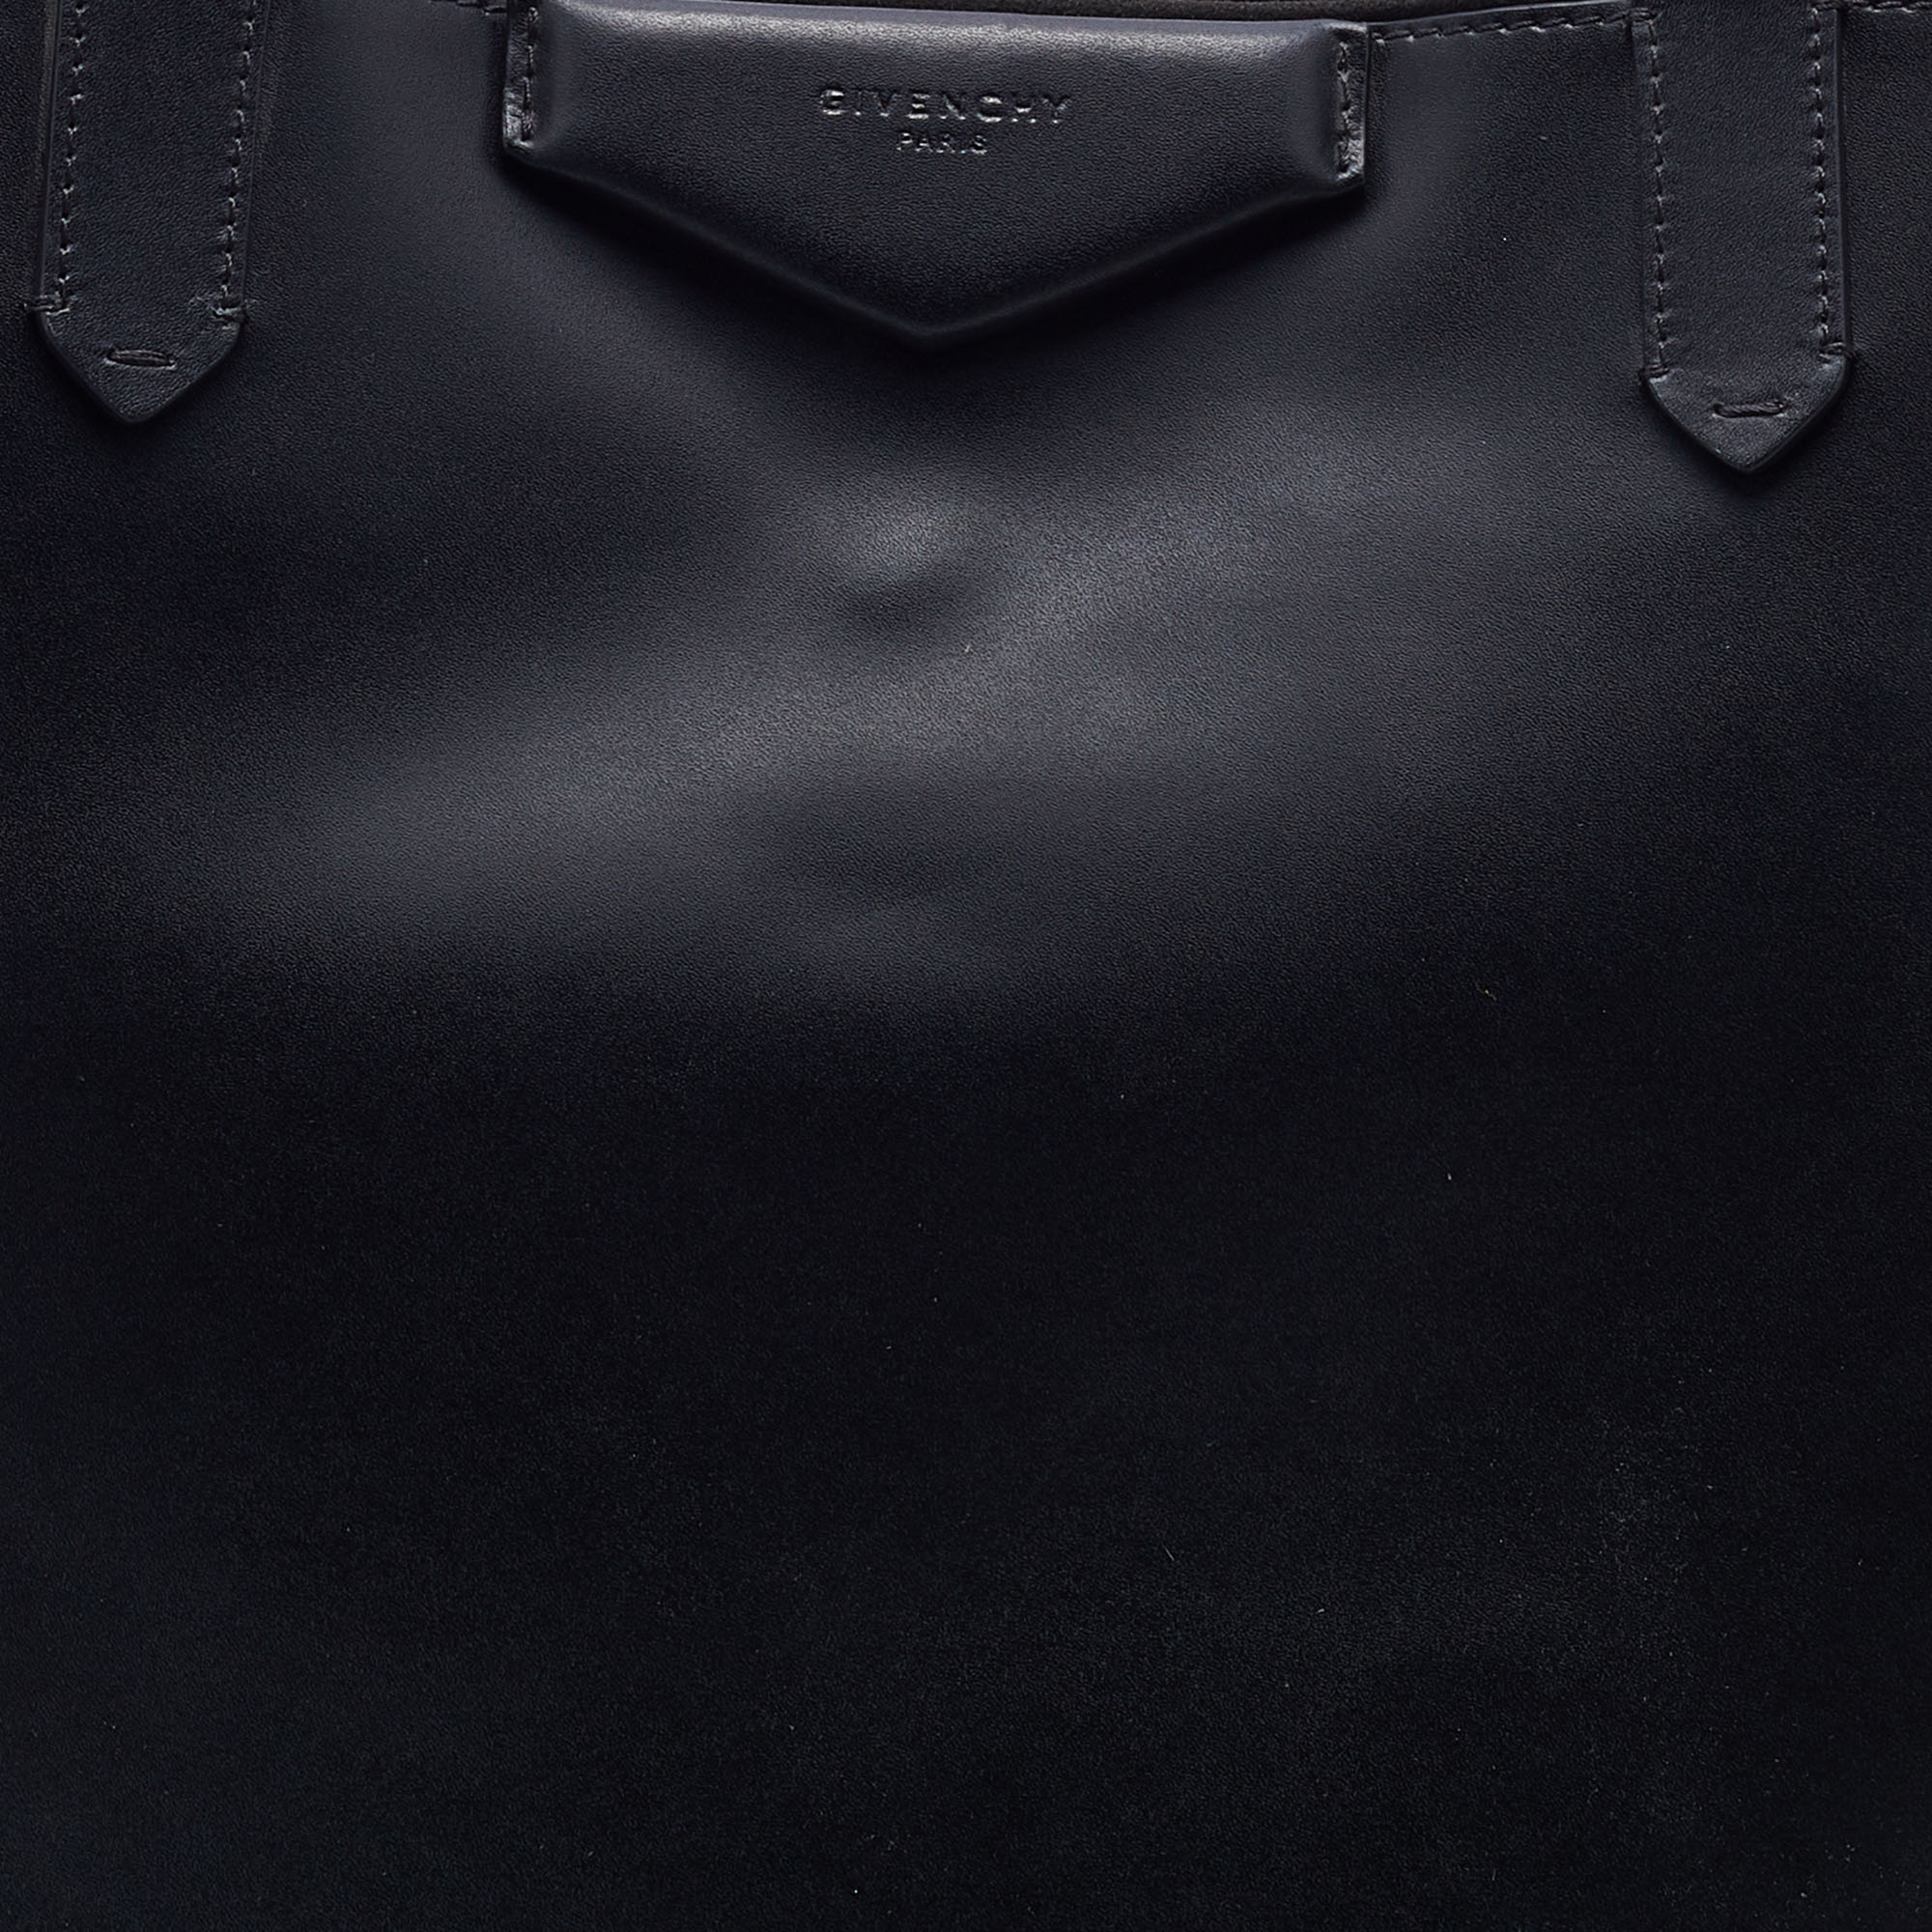 Givenchy Antigona Large Black Leather Tote – The Millionaires Closet